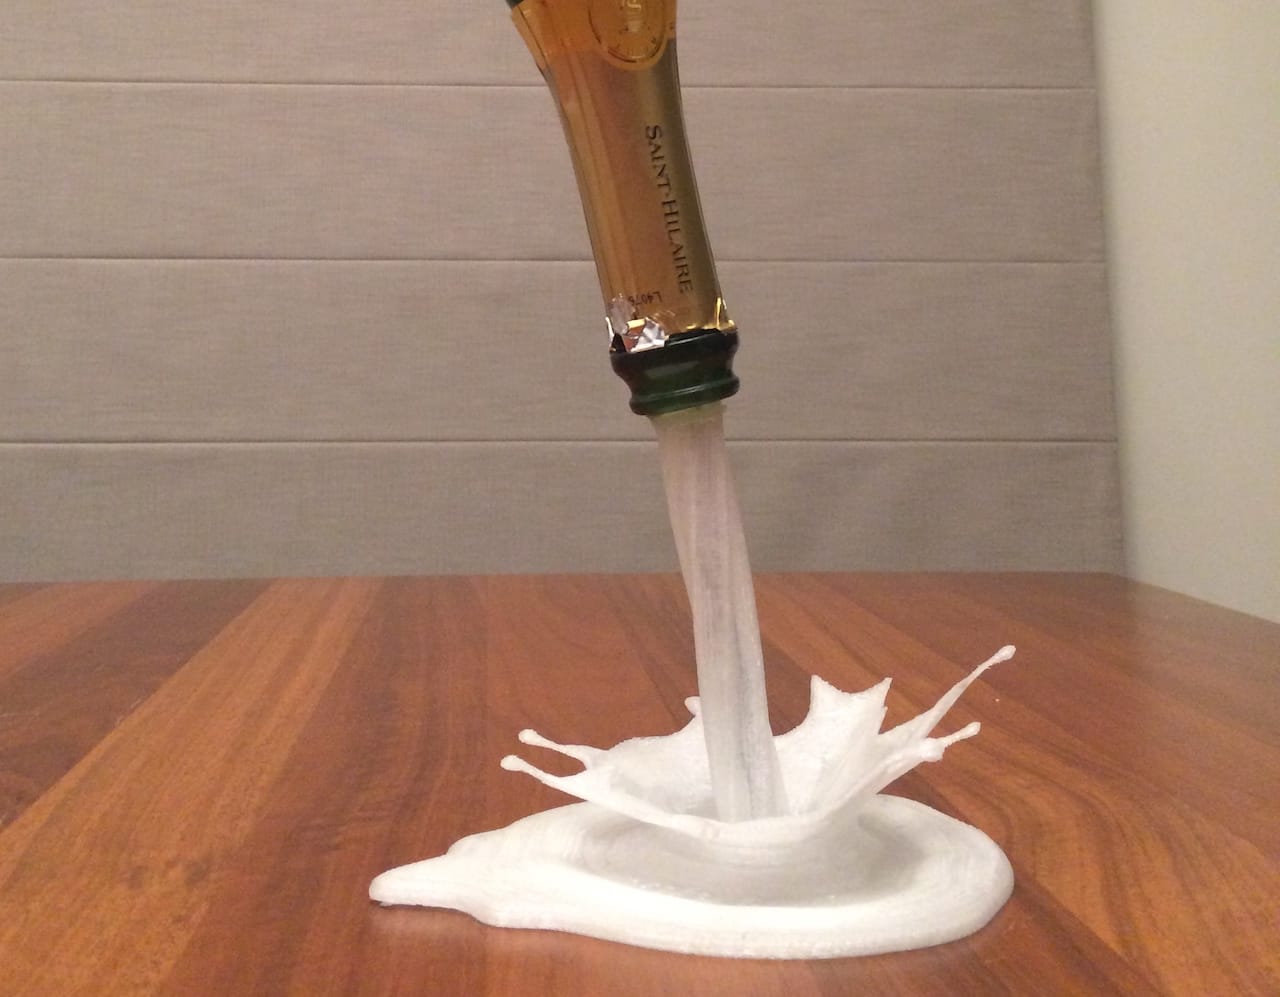  A Splashlight 3D printed in white material 